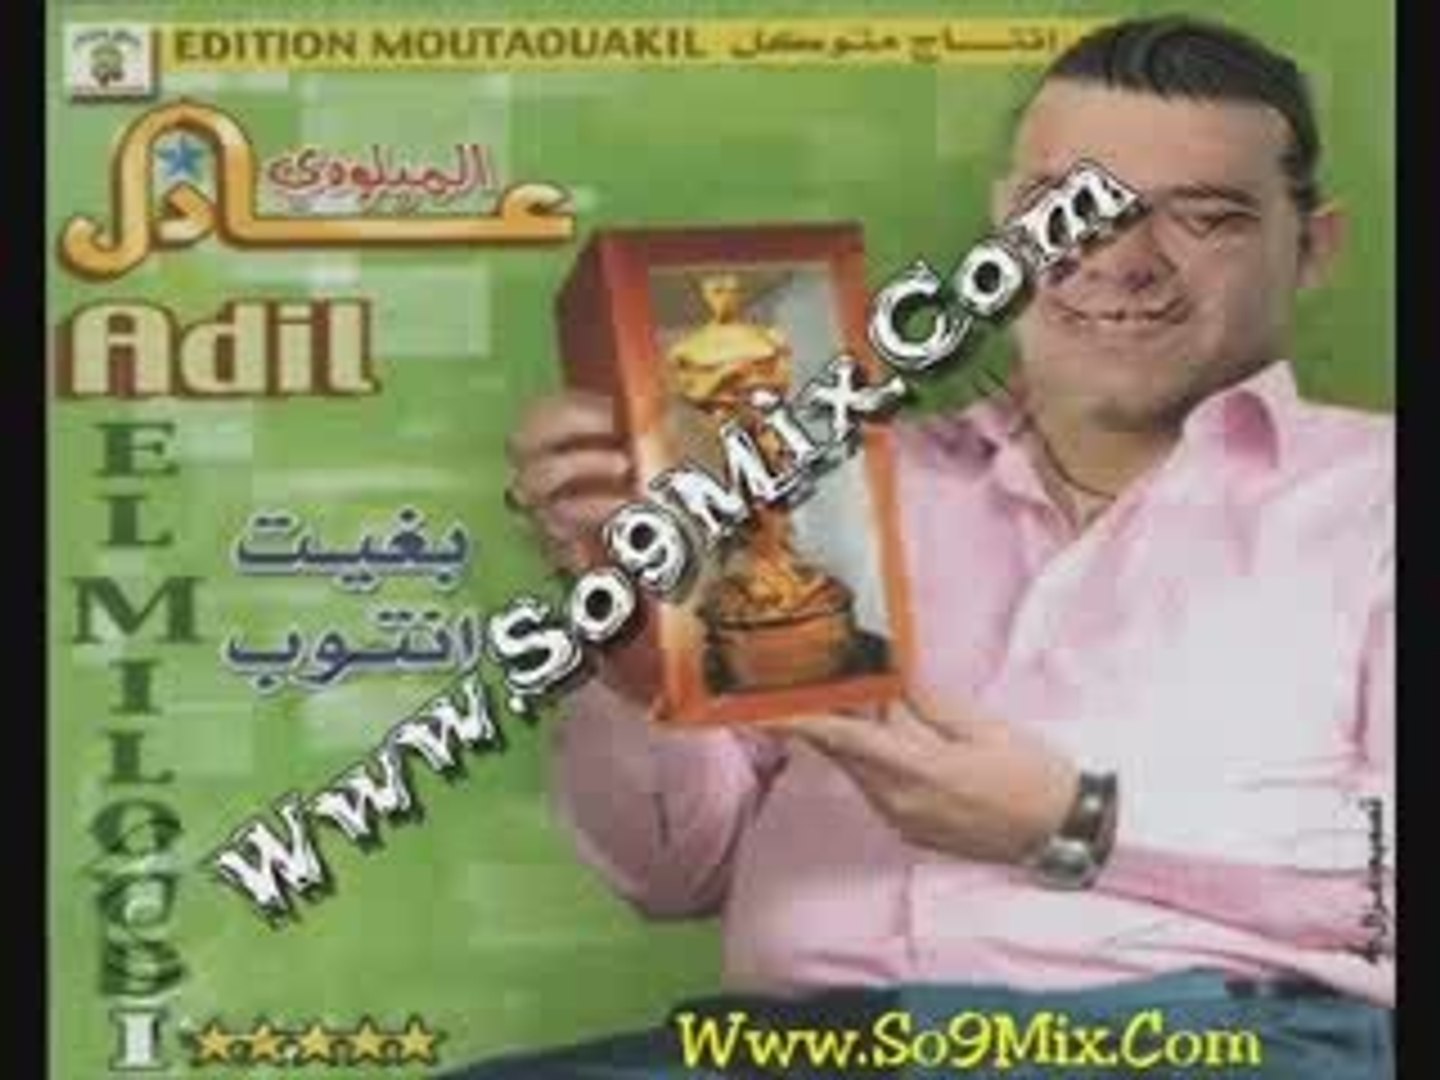 Adil El Miloudi 2010 - Bghit Ntoub - Www.So9Mix.Com - Vidéo Dailymotion